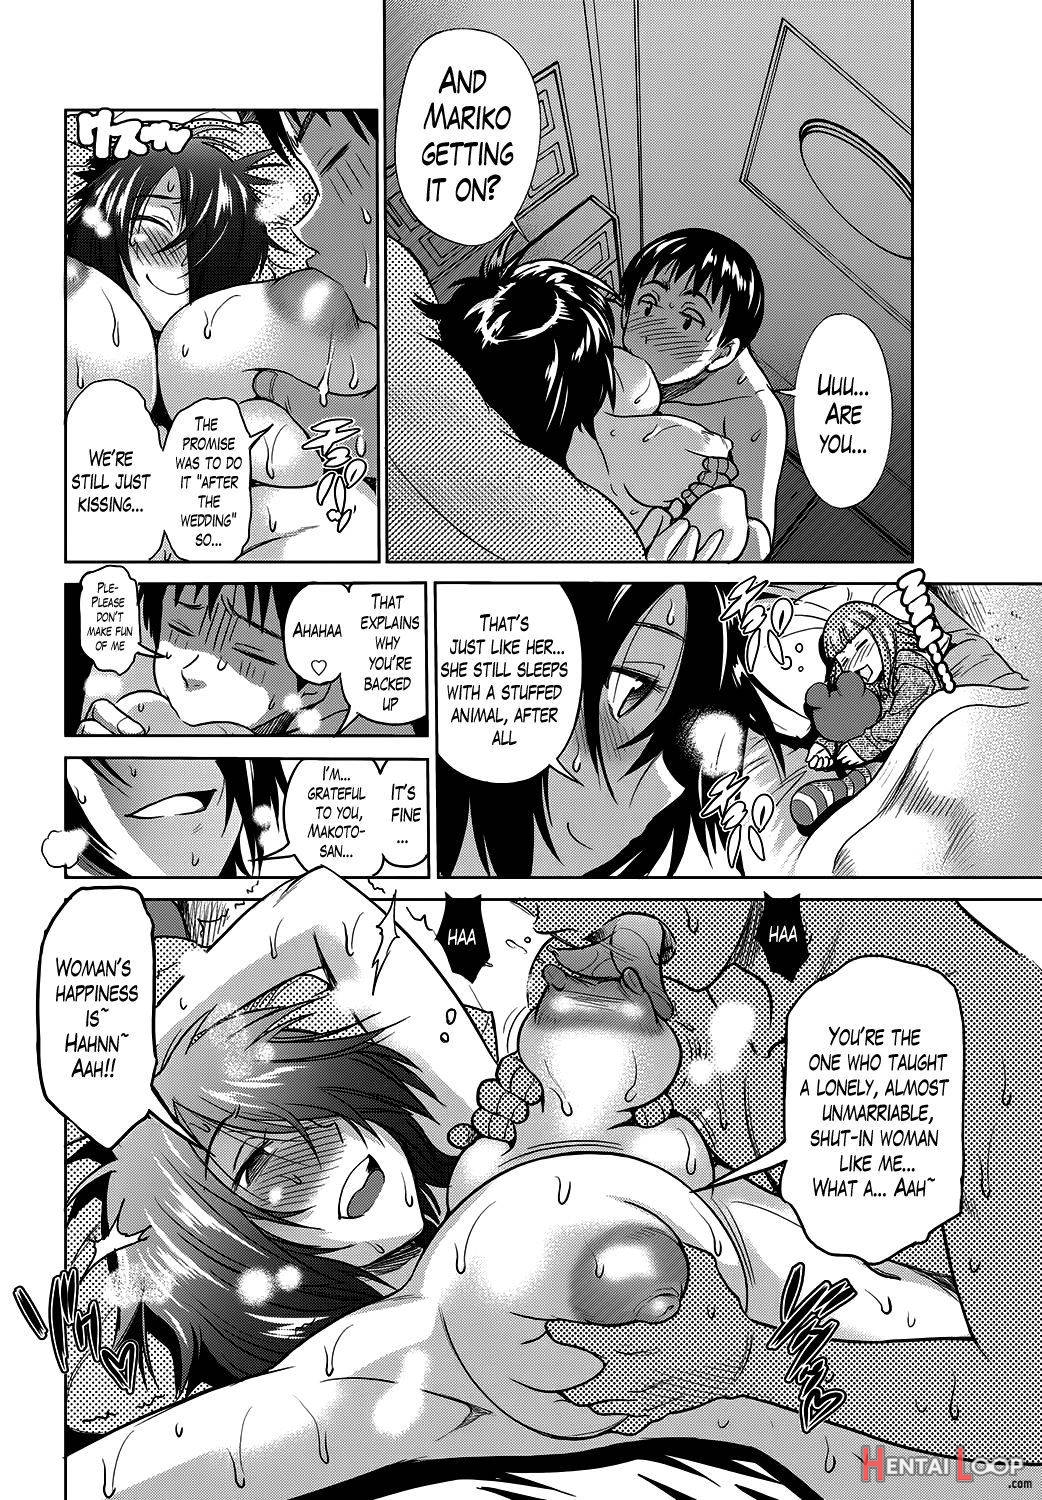 Hanayome No Ane page 8